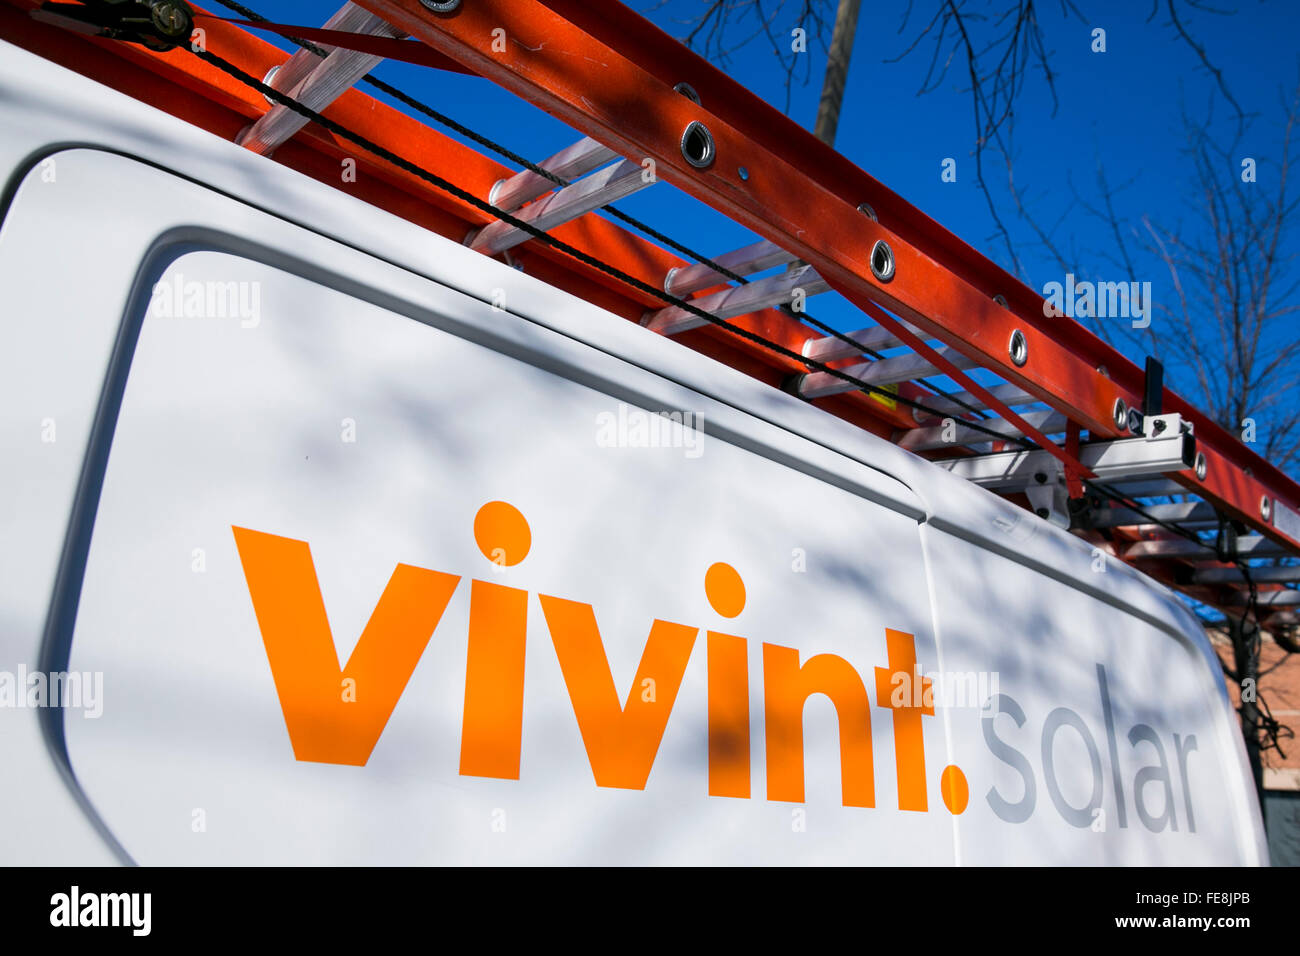 Camion con un Vivint logo solare in Beltsville, Maryland il 2 gennaio 2016. Foto Stock